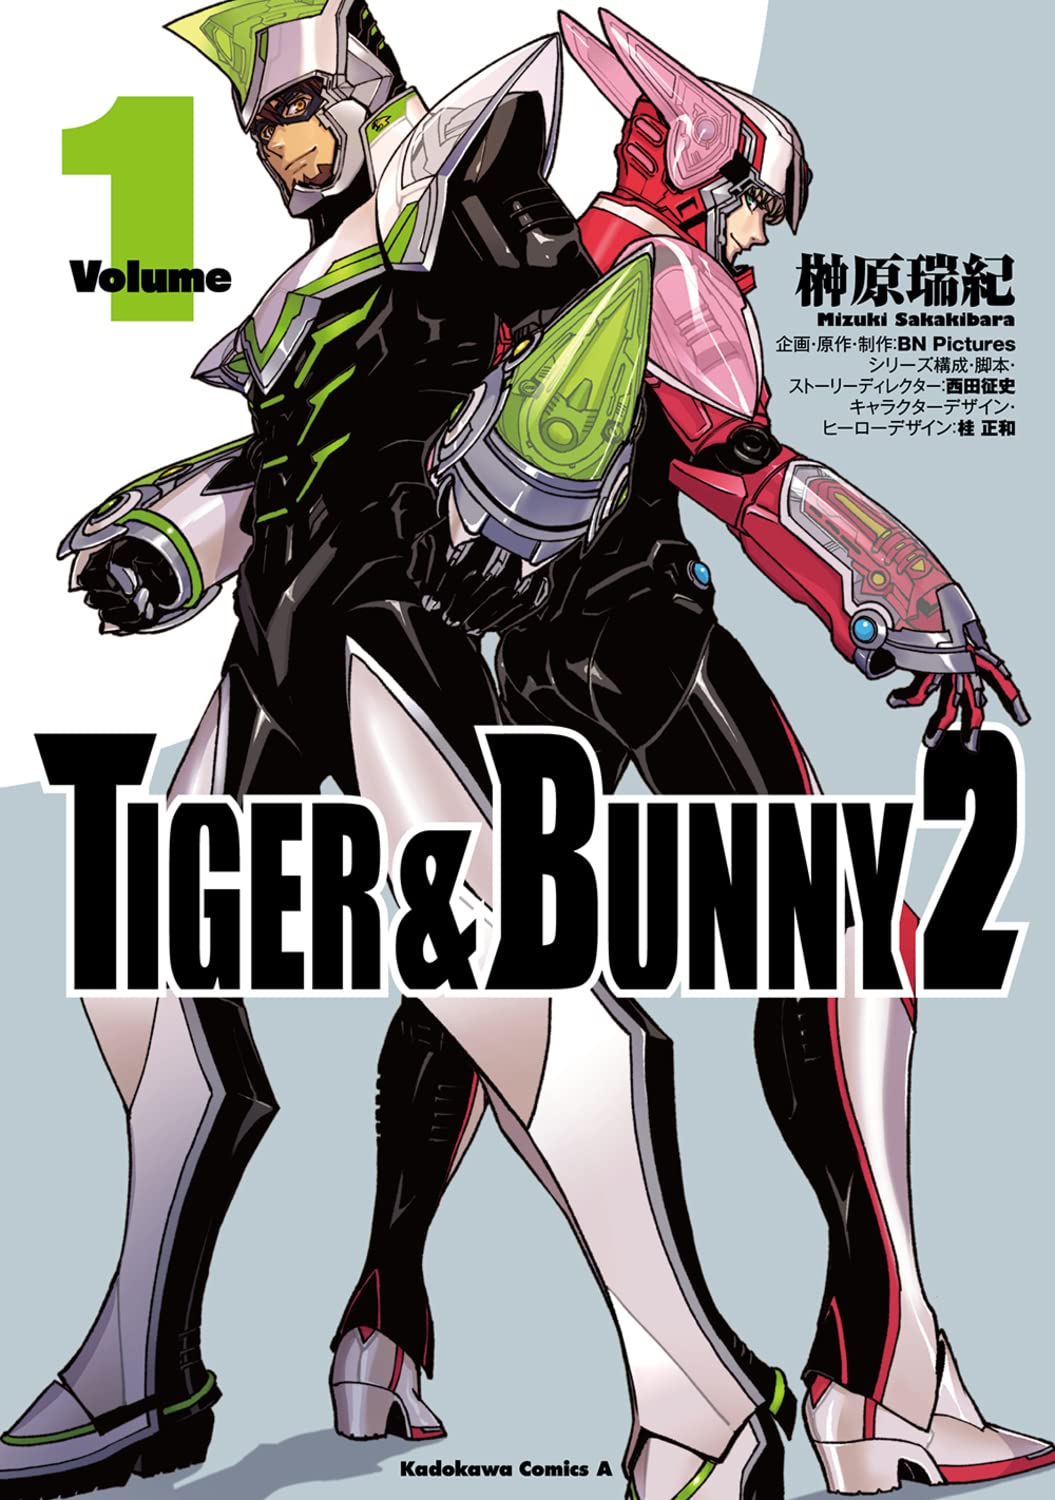 TIGER & BUNNY 2 #1   / Comic